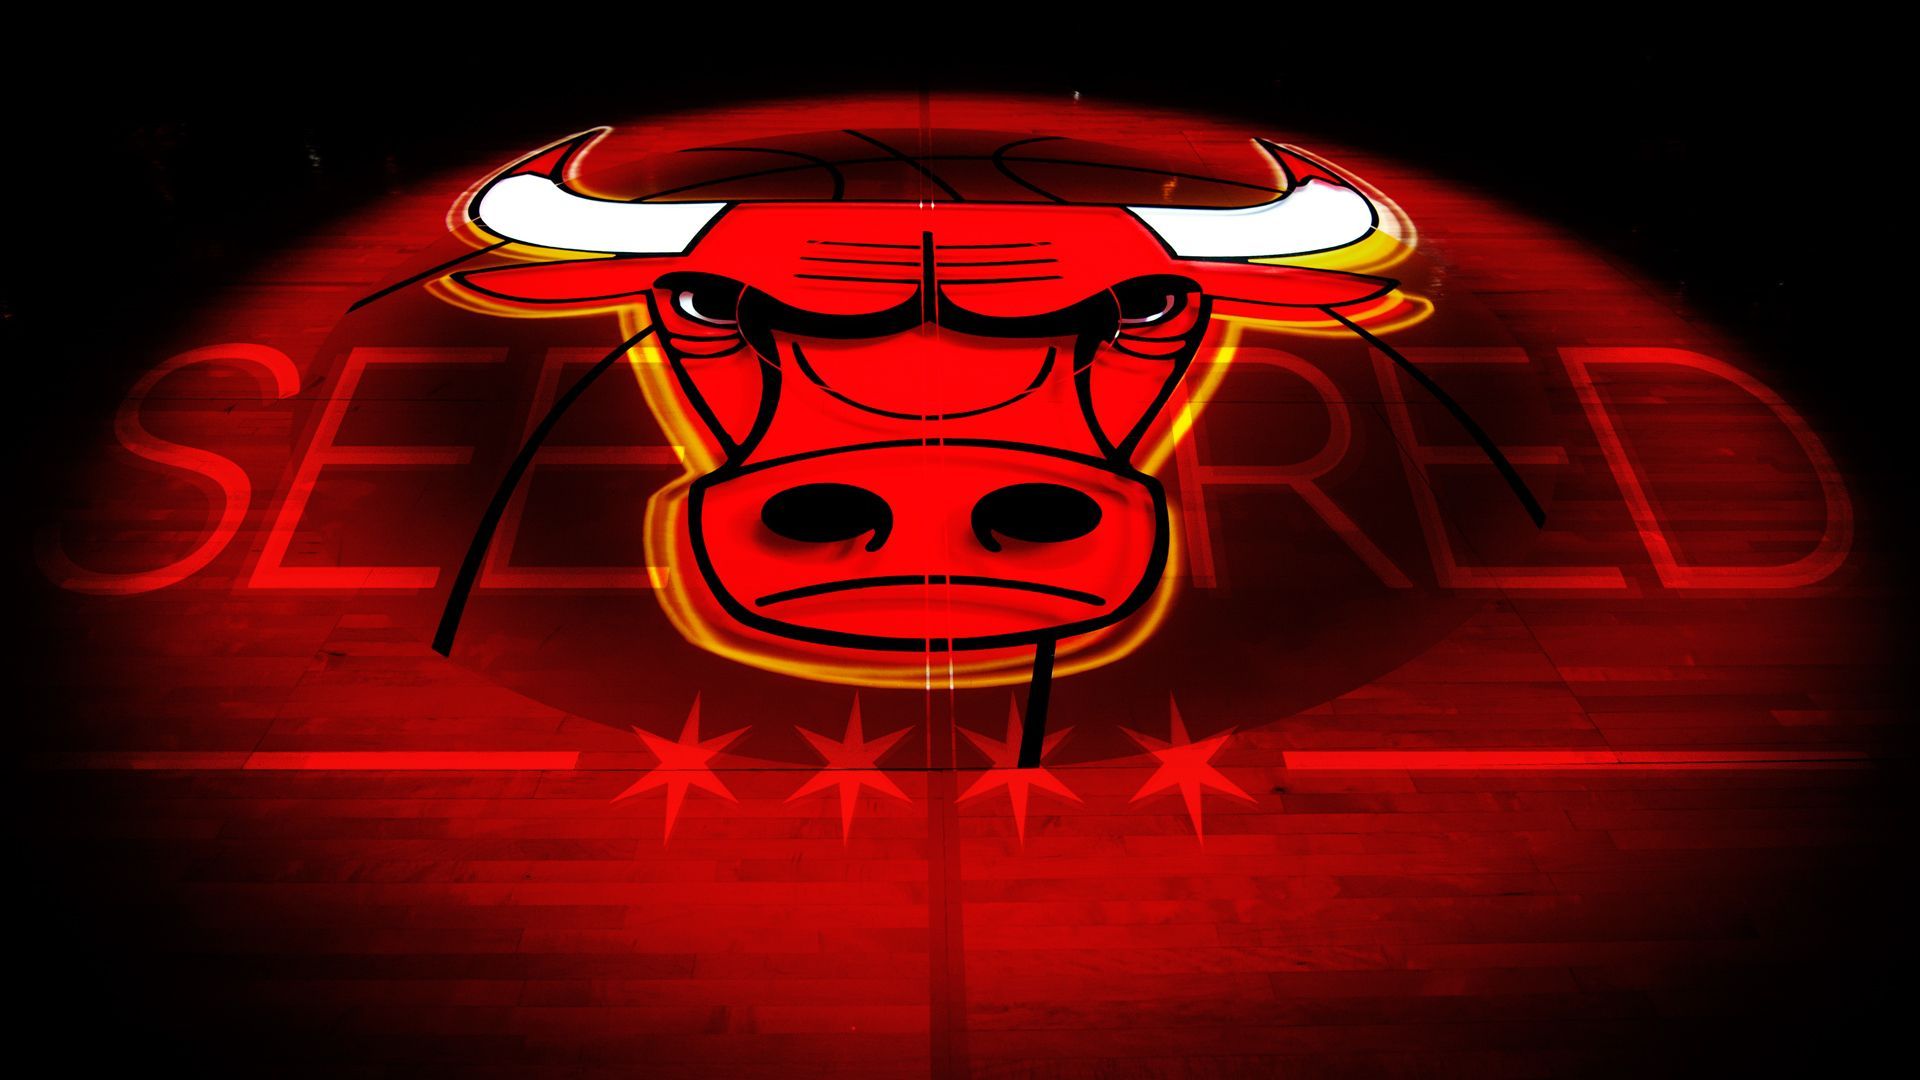 Chicago bulls wallpaper, Bull picture.com